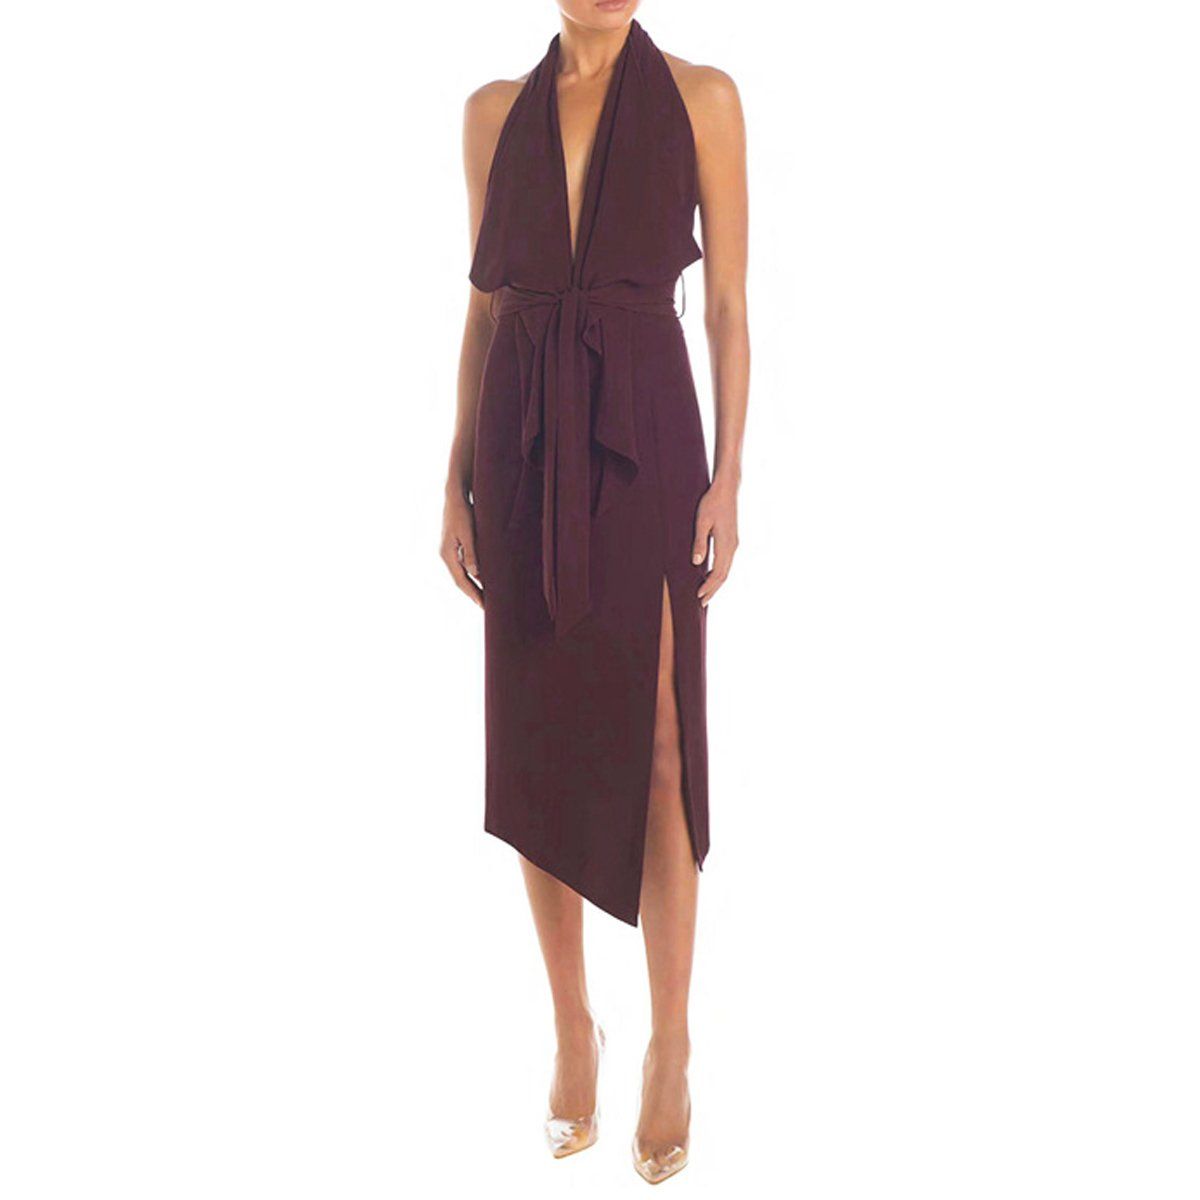 Brooklyn halter dress Dress Lovefreya Pte Ltd 